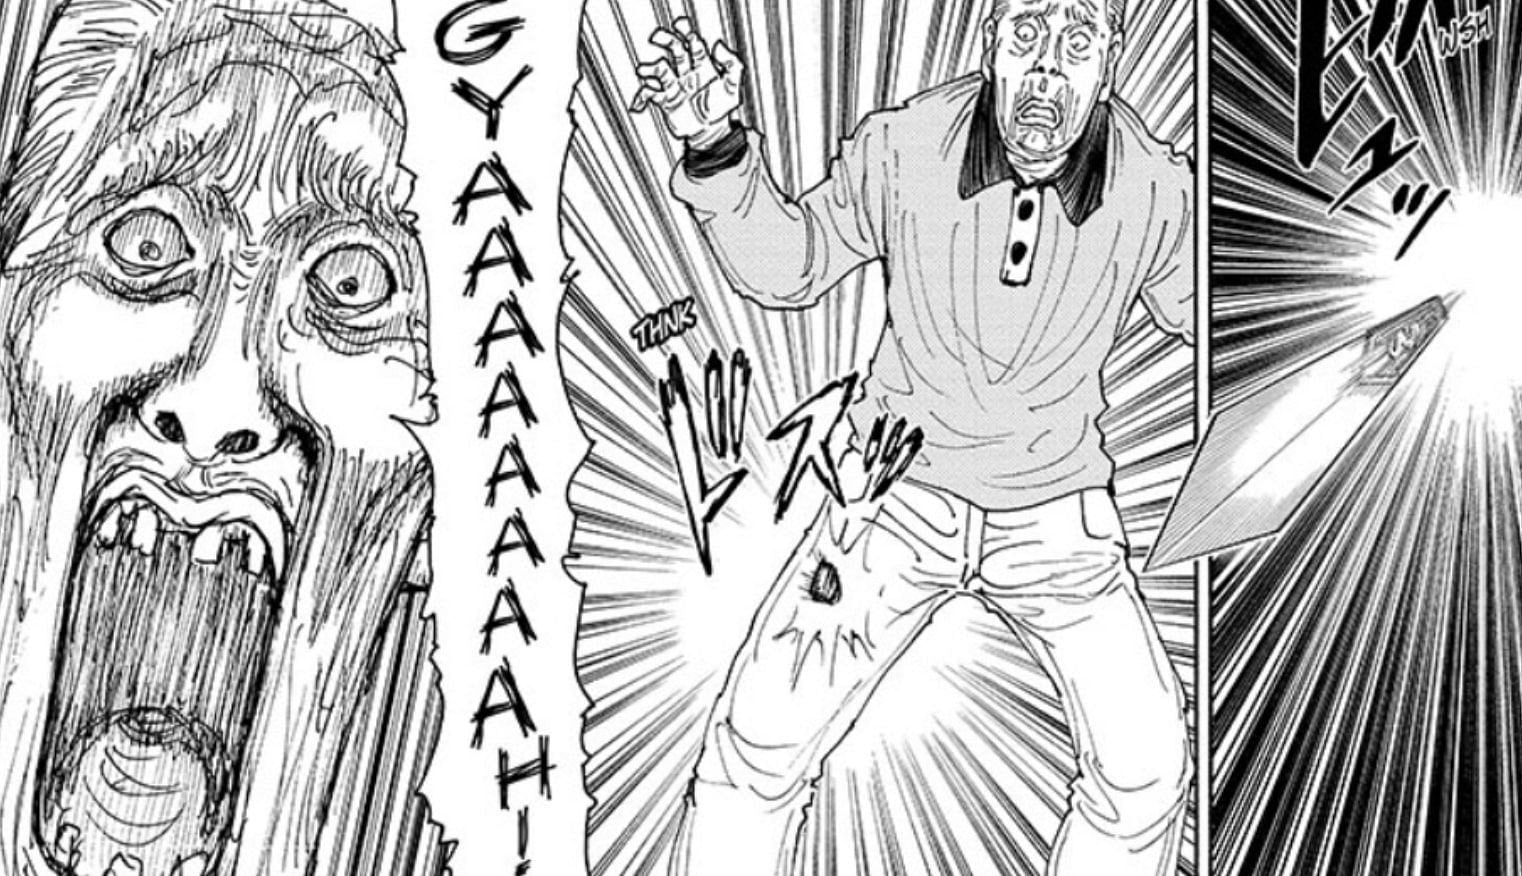 The old man screaming in pain (Image via Shueisha)